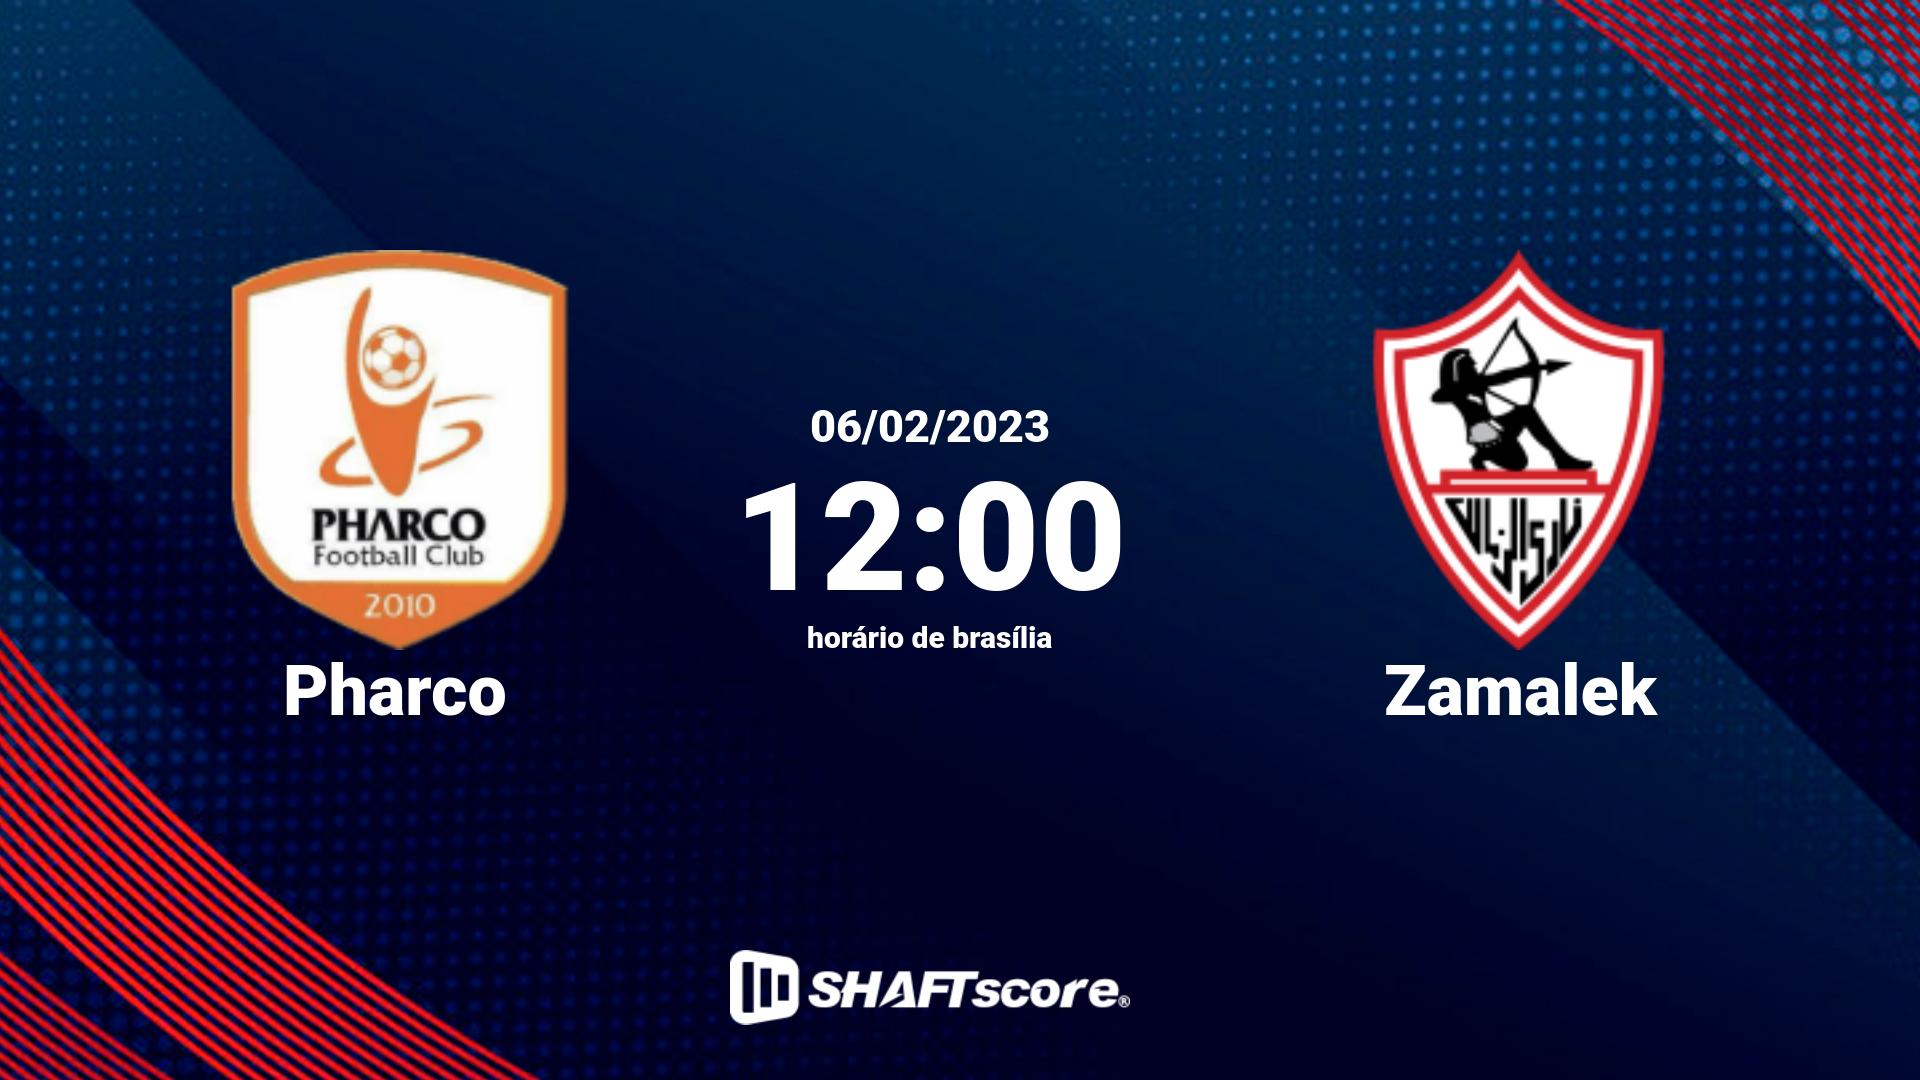 Estatísticas do jogo Pharco vs Zamalek 06.02 12:00